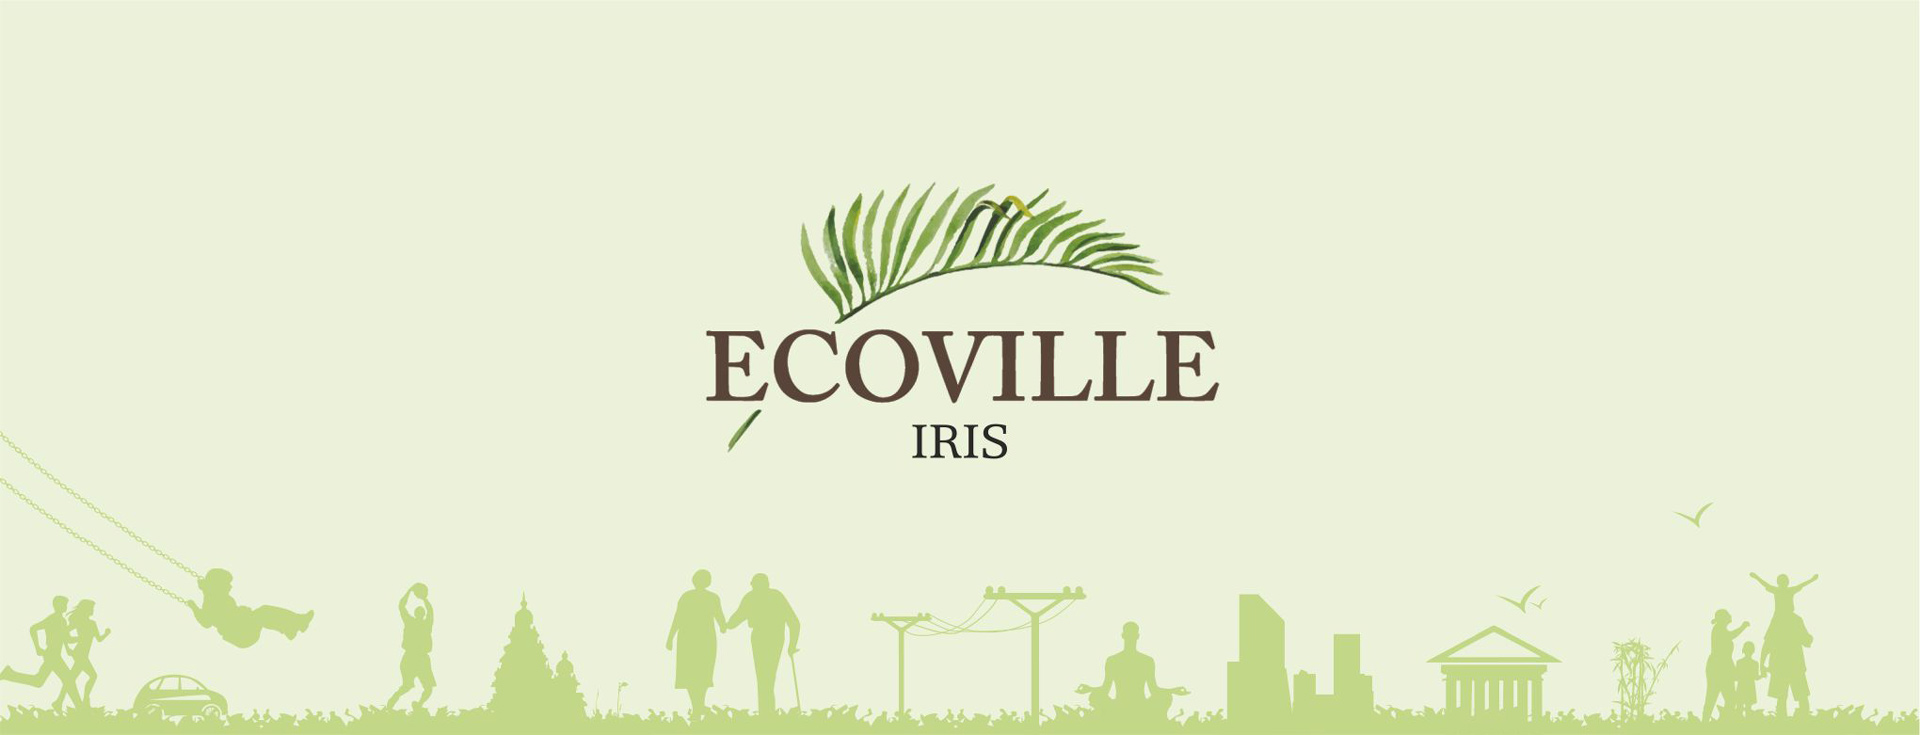 Ecoville IRIS logo